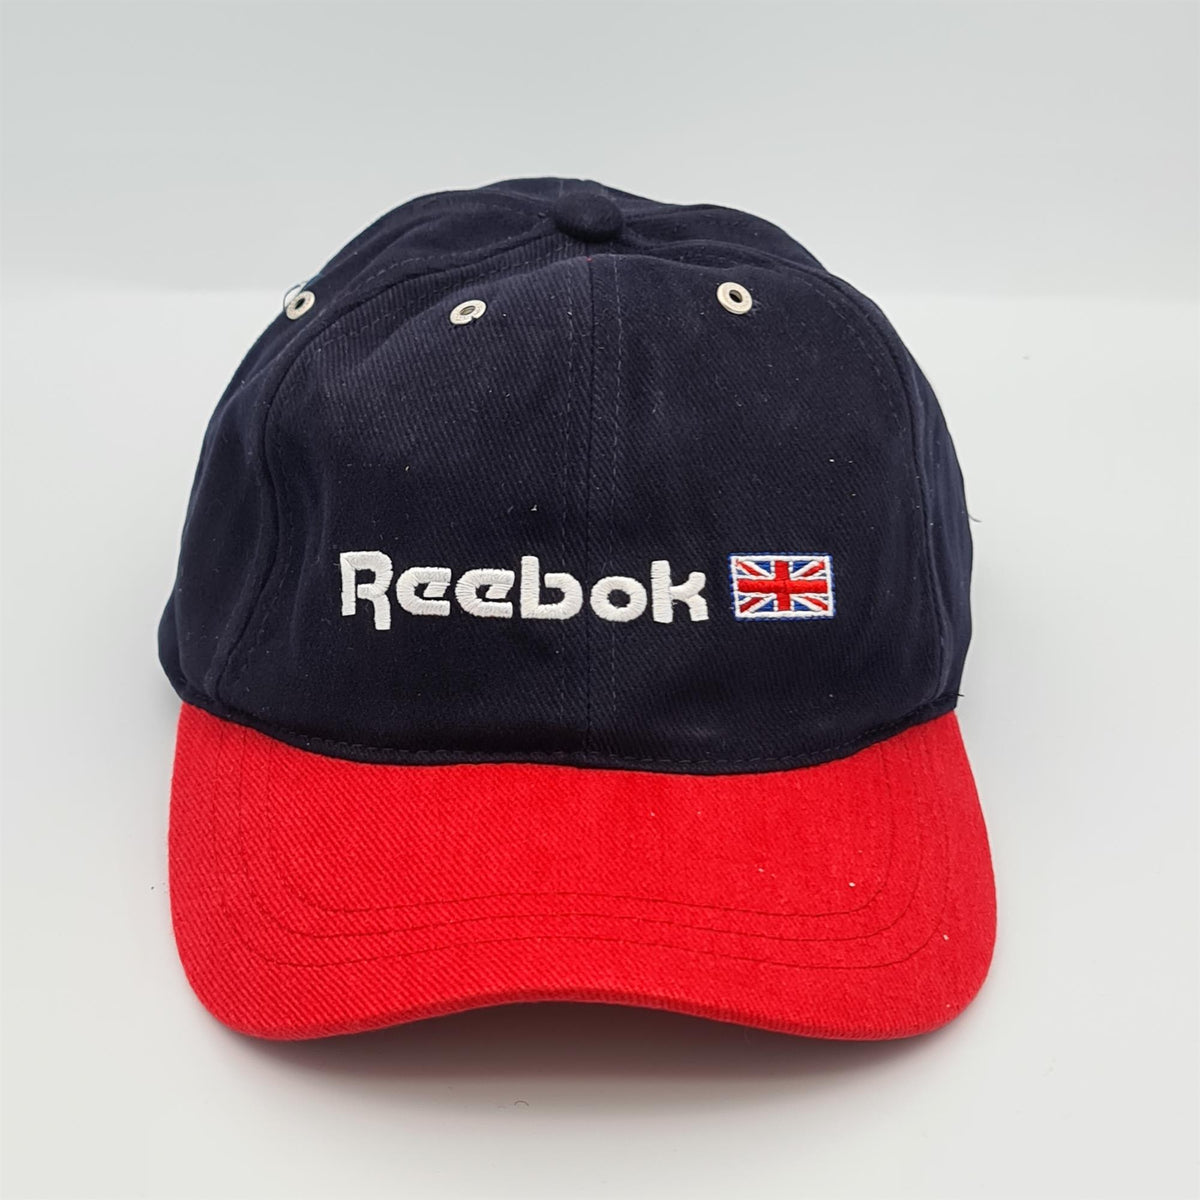 Reebok Unisex Classic Flag Contrast Adjustable Cap - Navy/Red